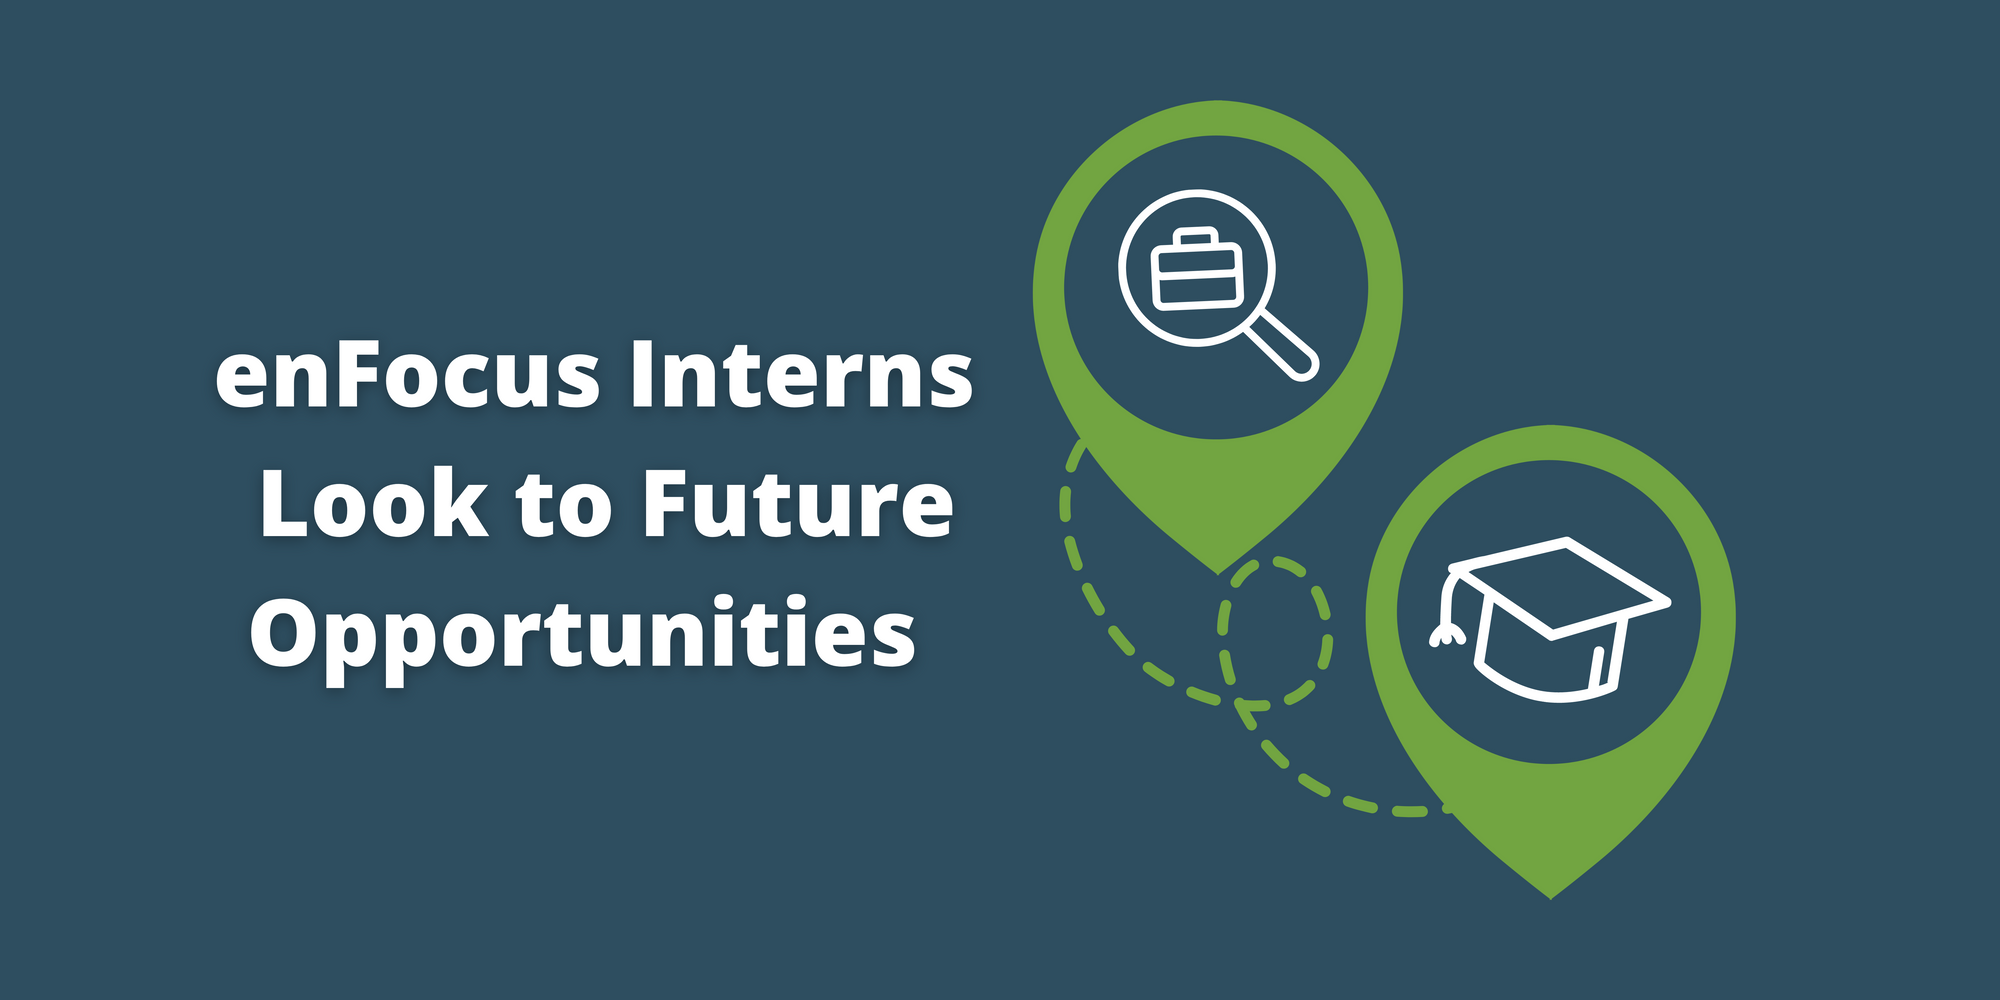 enFocus Interns Look to Future Opportunities